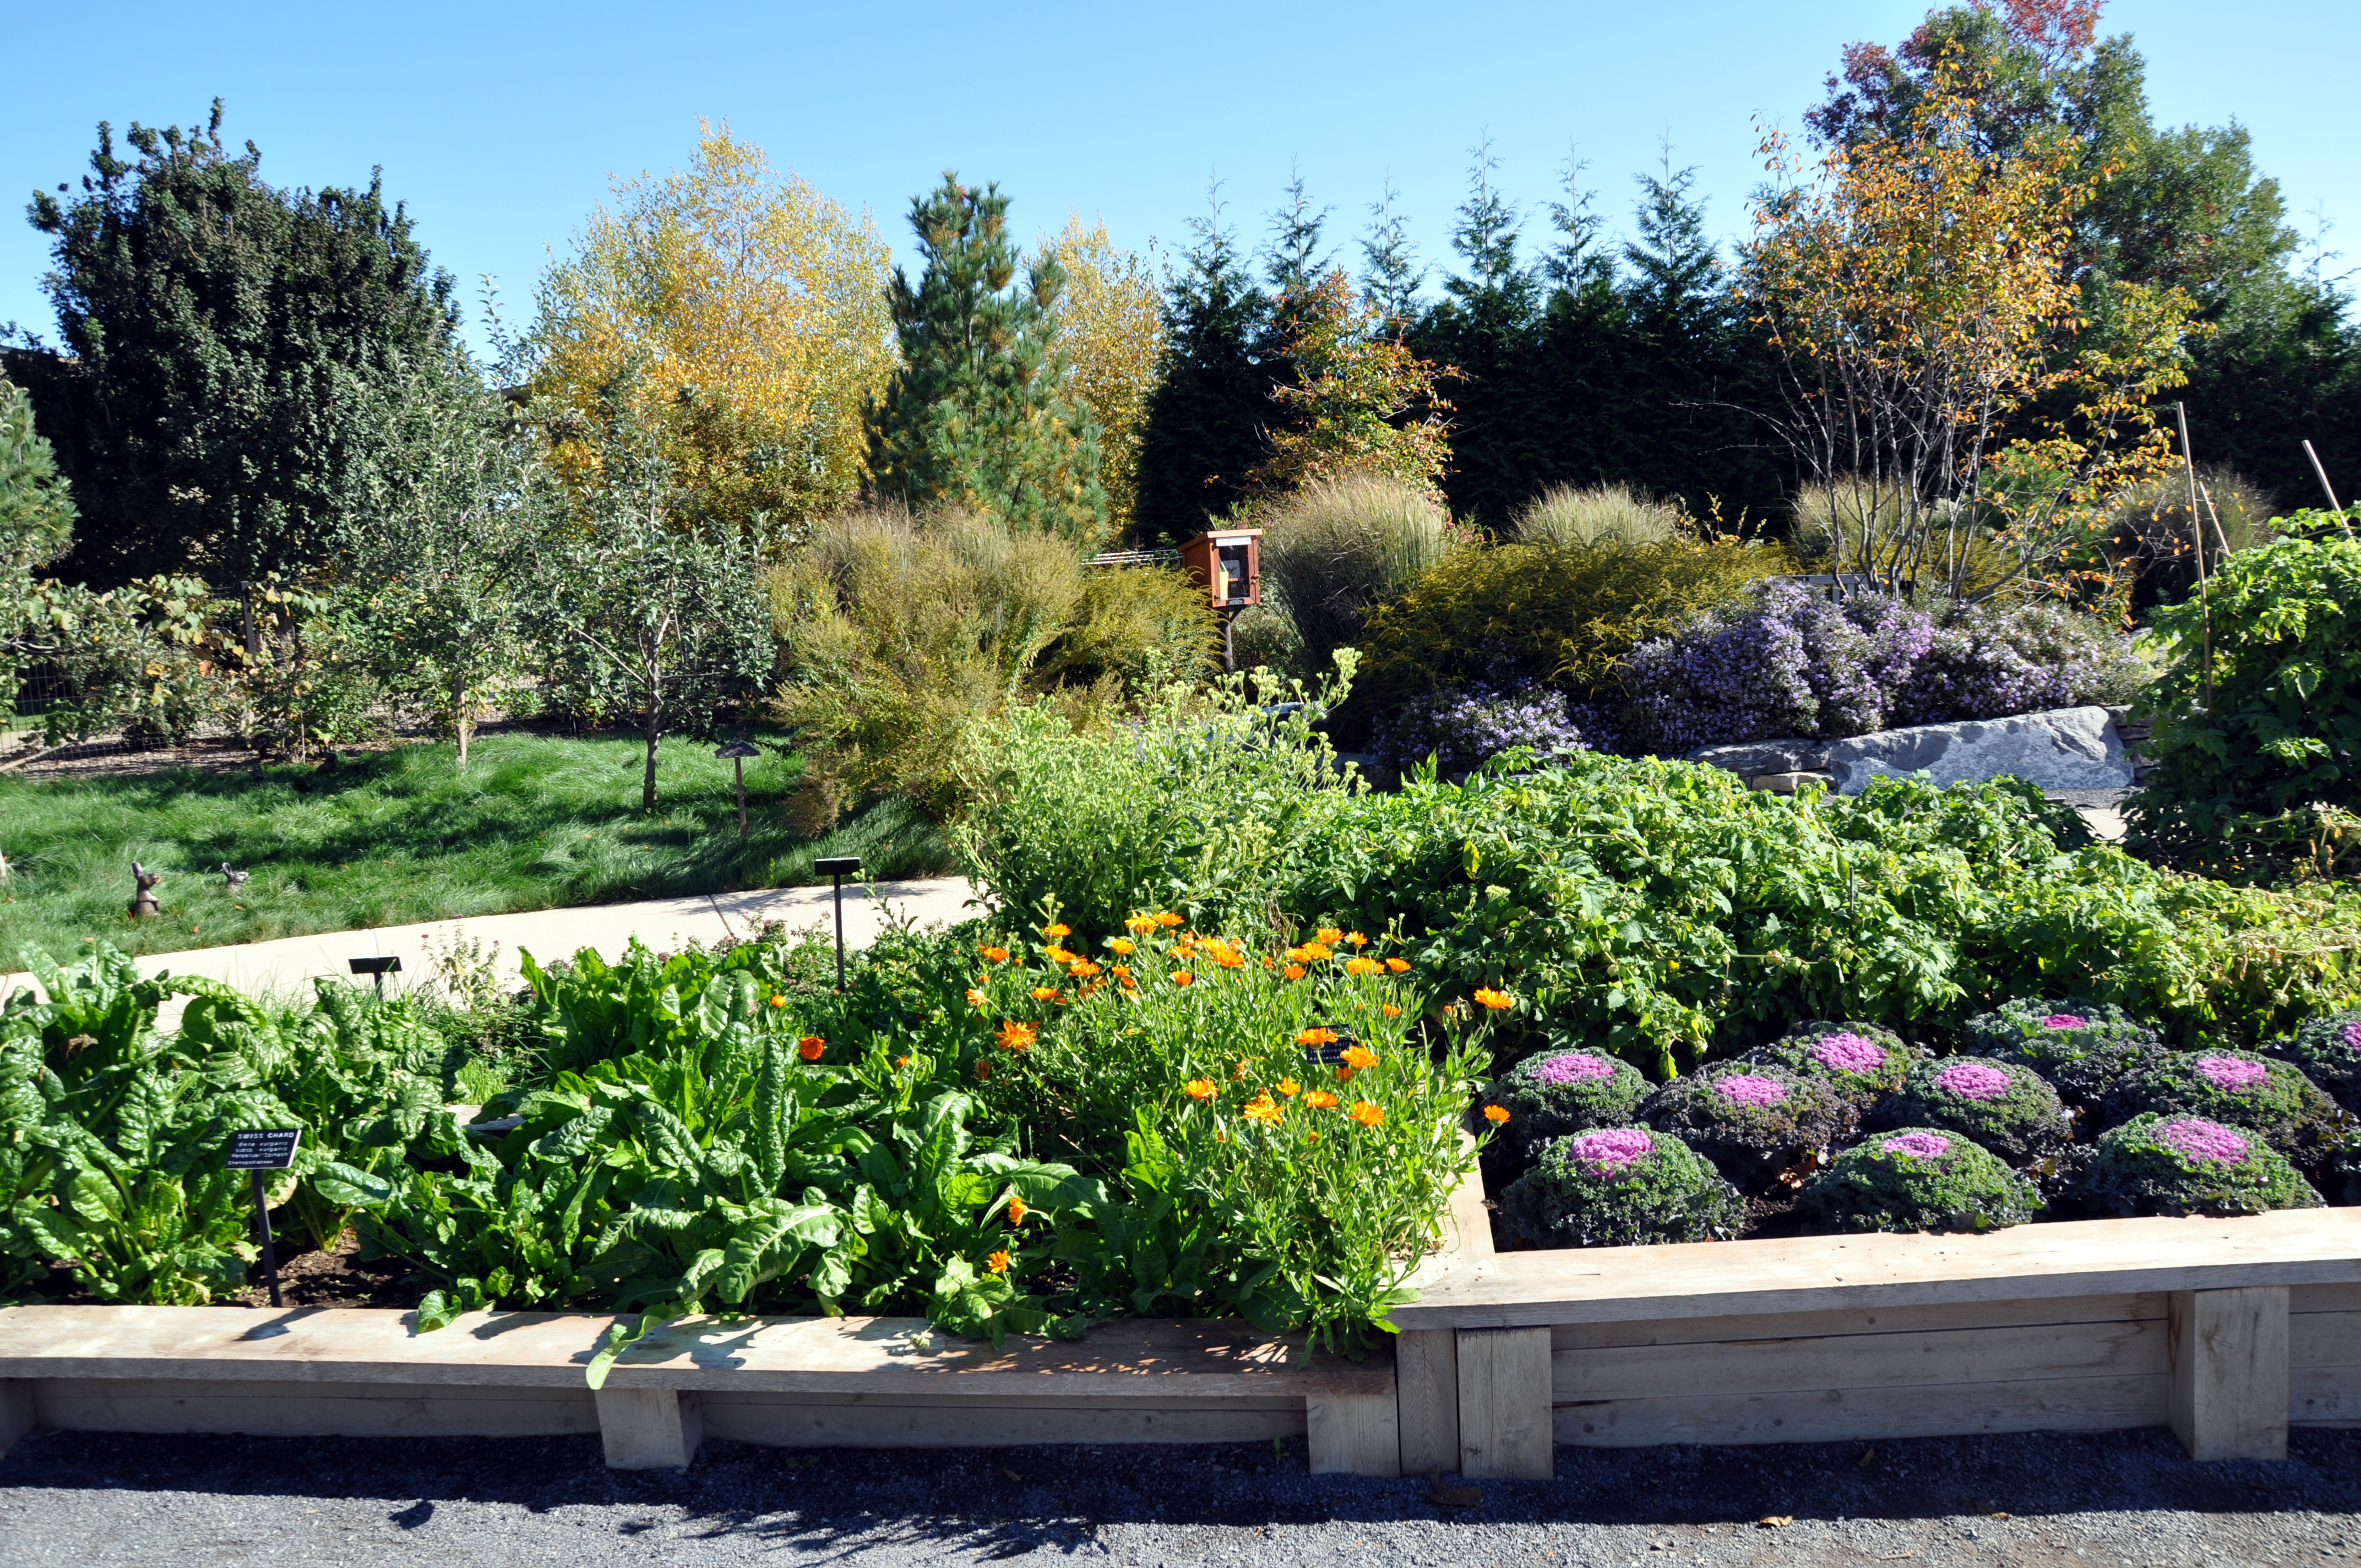 Harvest Gardens in mid-October 2015